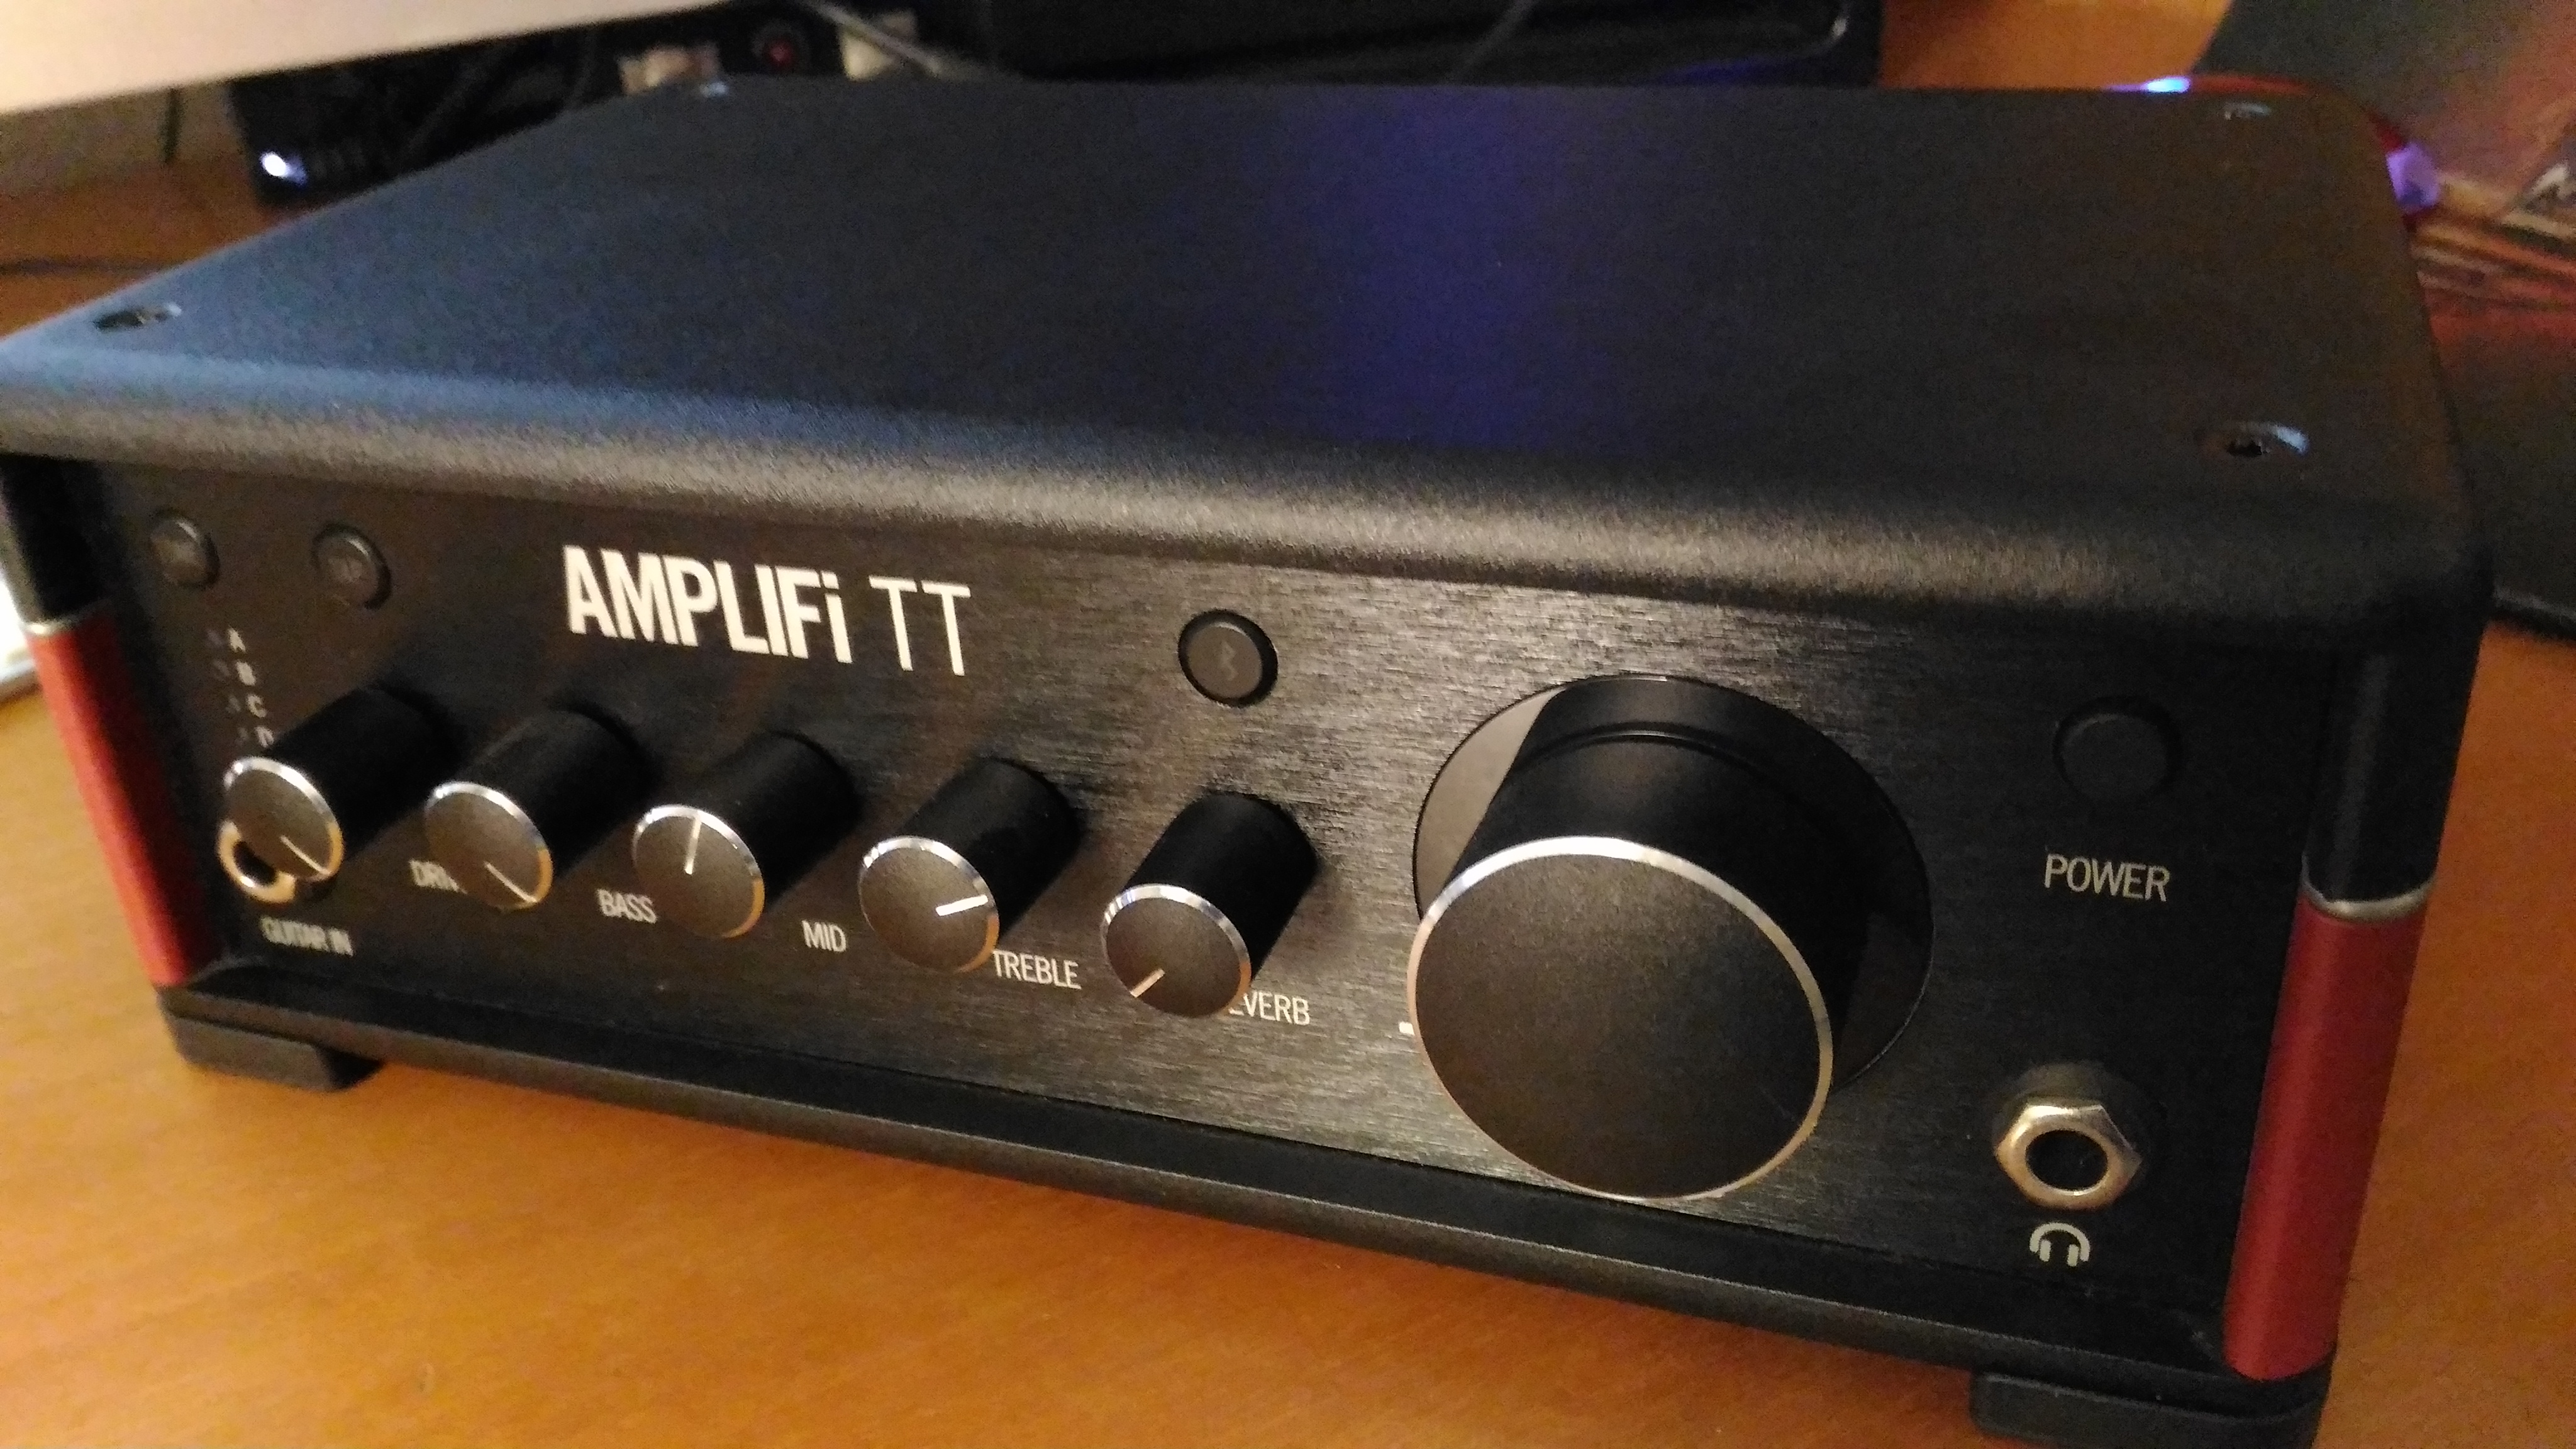 AMPLIFI TT - Line 6 AMPLIFi TT - Audiofanzine